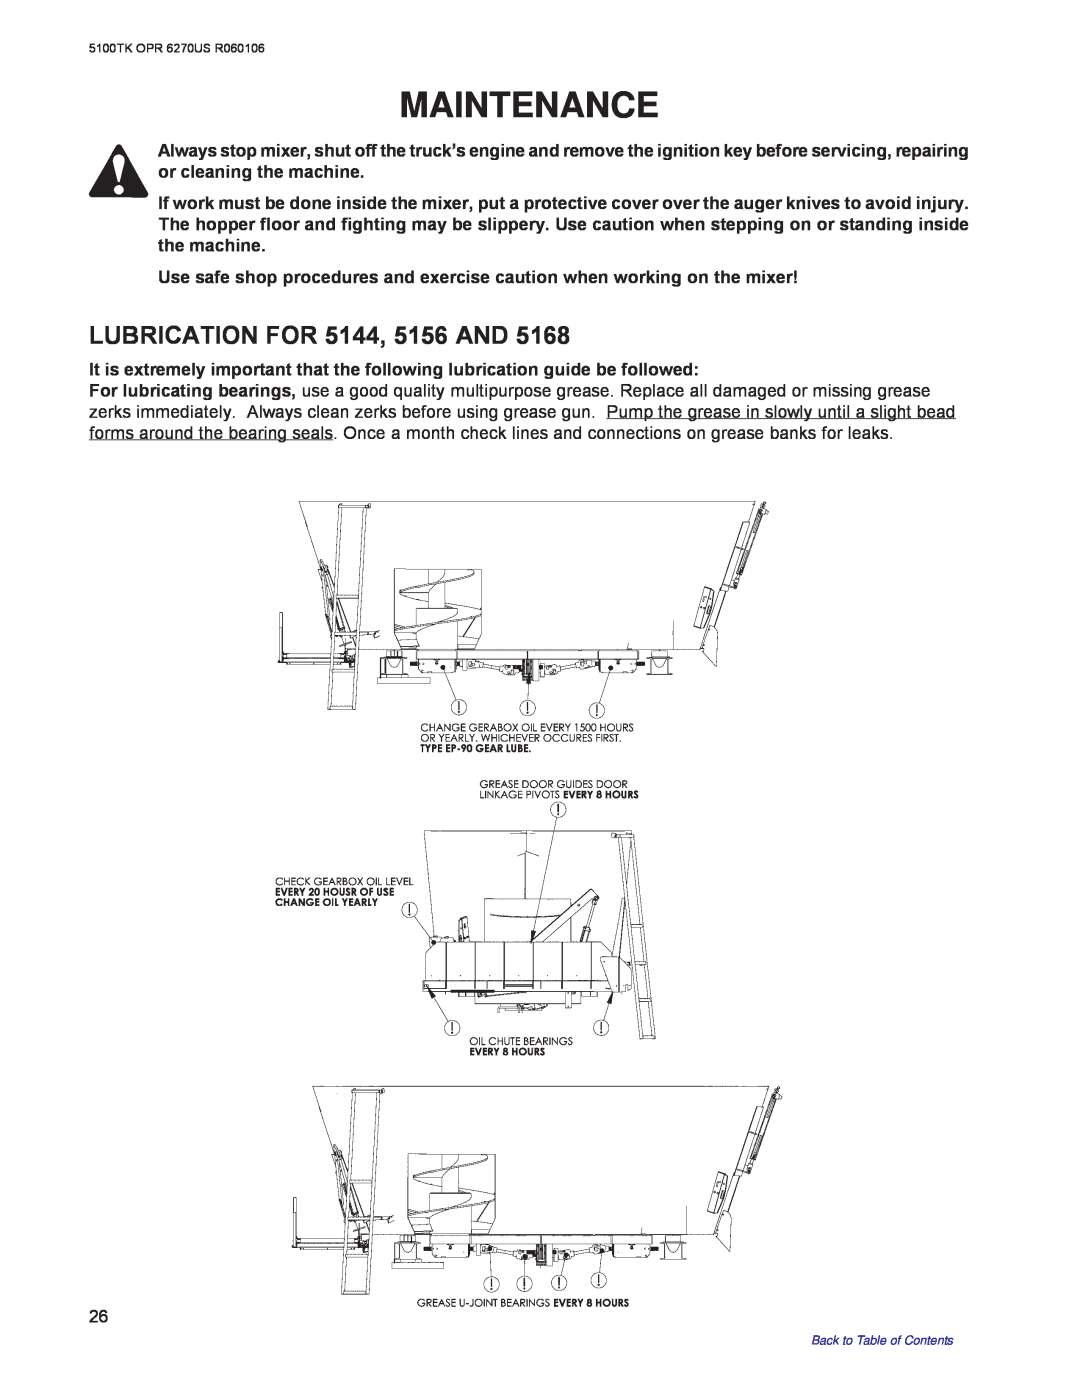 Kuhn Rikon 5100 instruction manual Maintenance, LUBRICATION FOR 5144, 5156 AND 